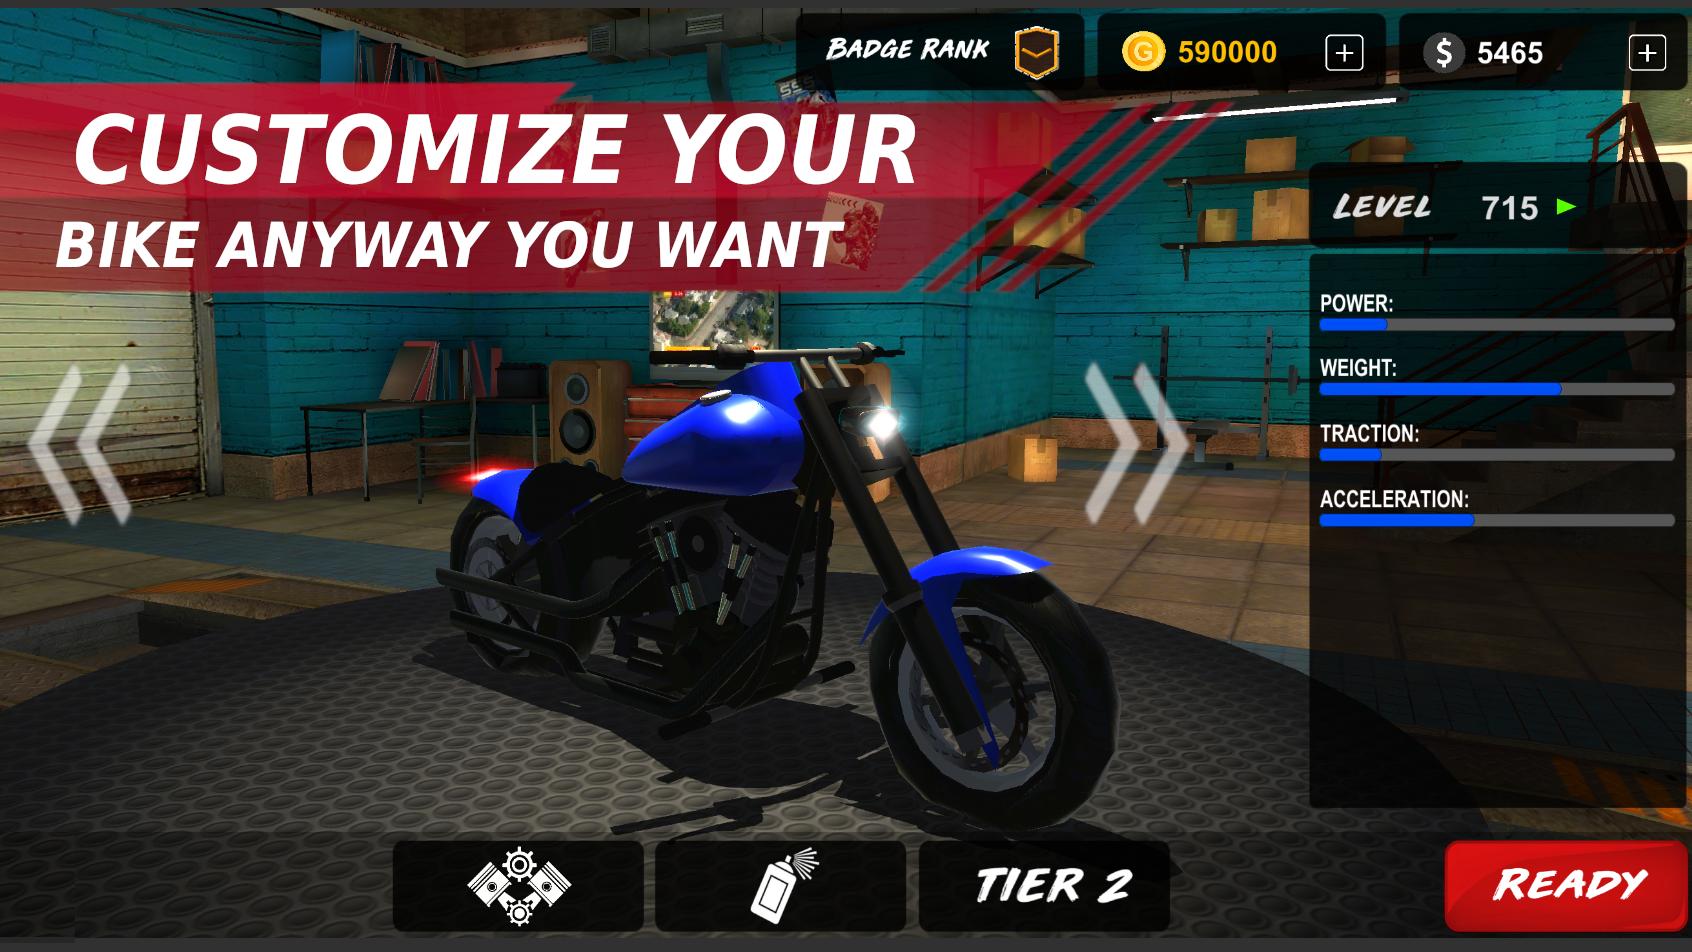 Rebel Gears Drag Bike Racing / CSR Race Moto Game 1.3.2 Screenshot 16